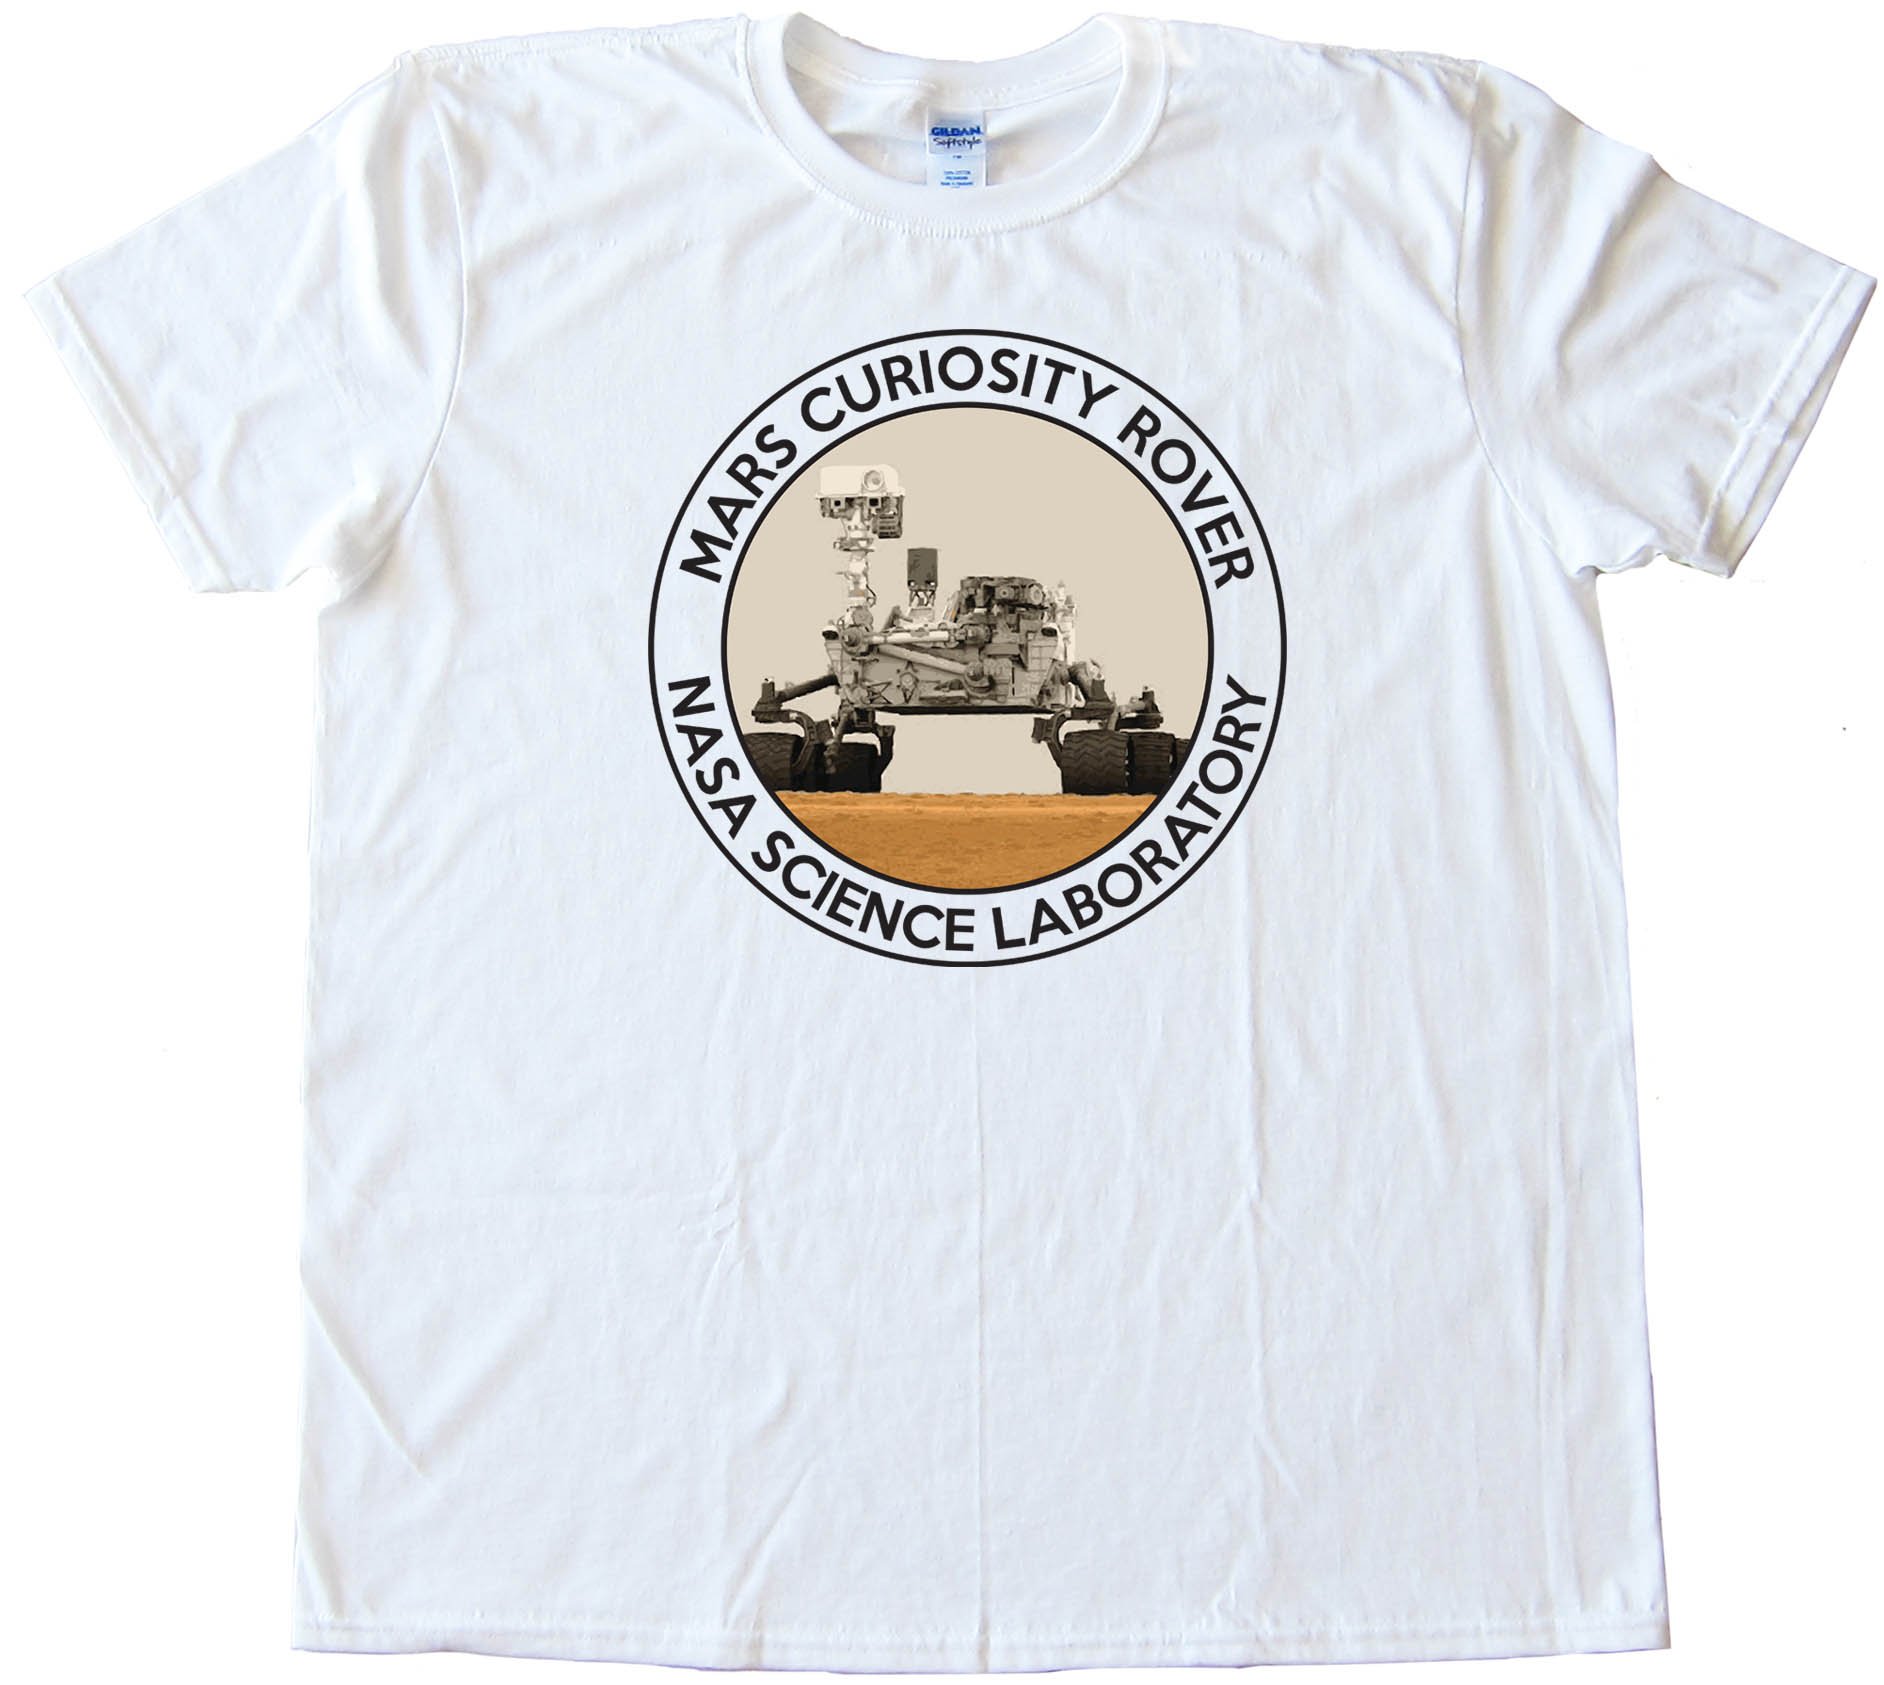 Mars Curiosity Rover - Nasa Science Laboratory - Tee Shirt